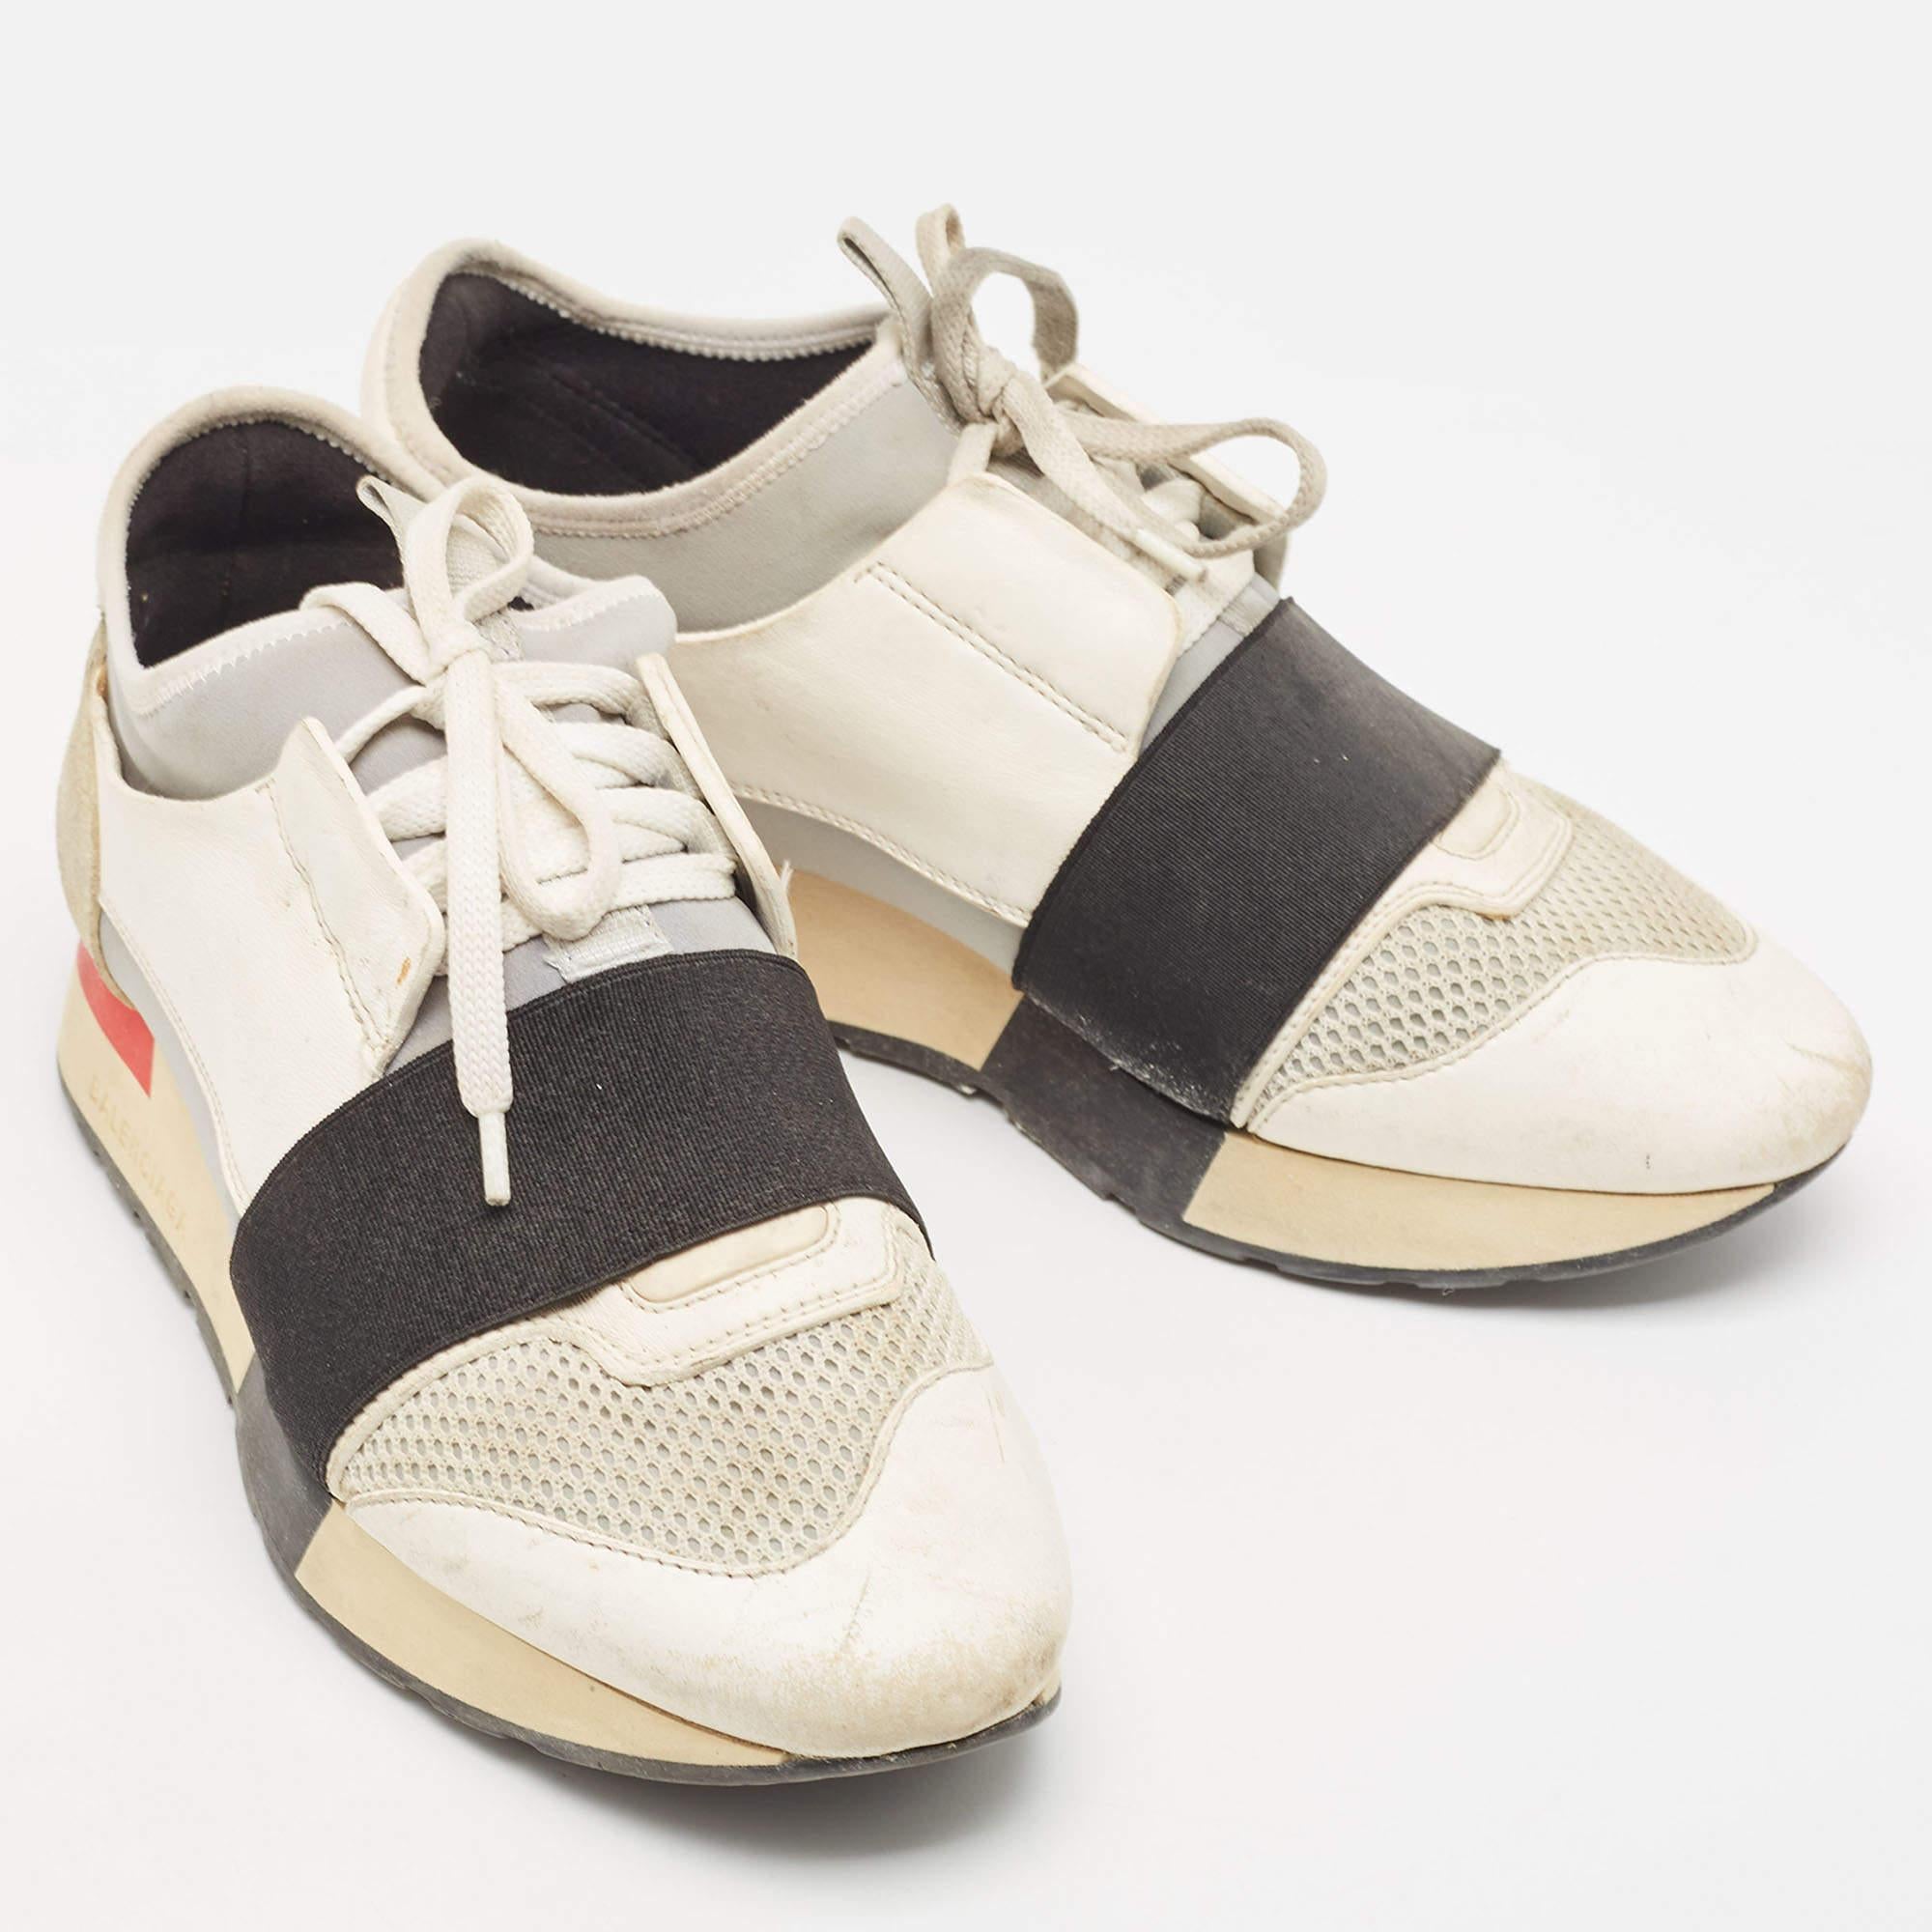 Balenciaga Multicolor Suede and Leather Race Runner Sneakers Size 37 In Good Condition For Sale In Dubai, Al Qouz 2